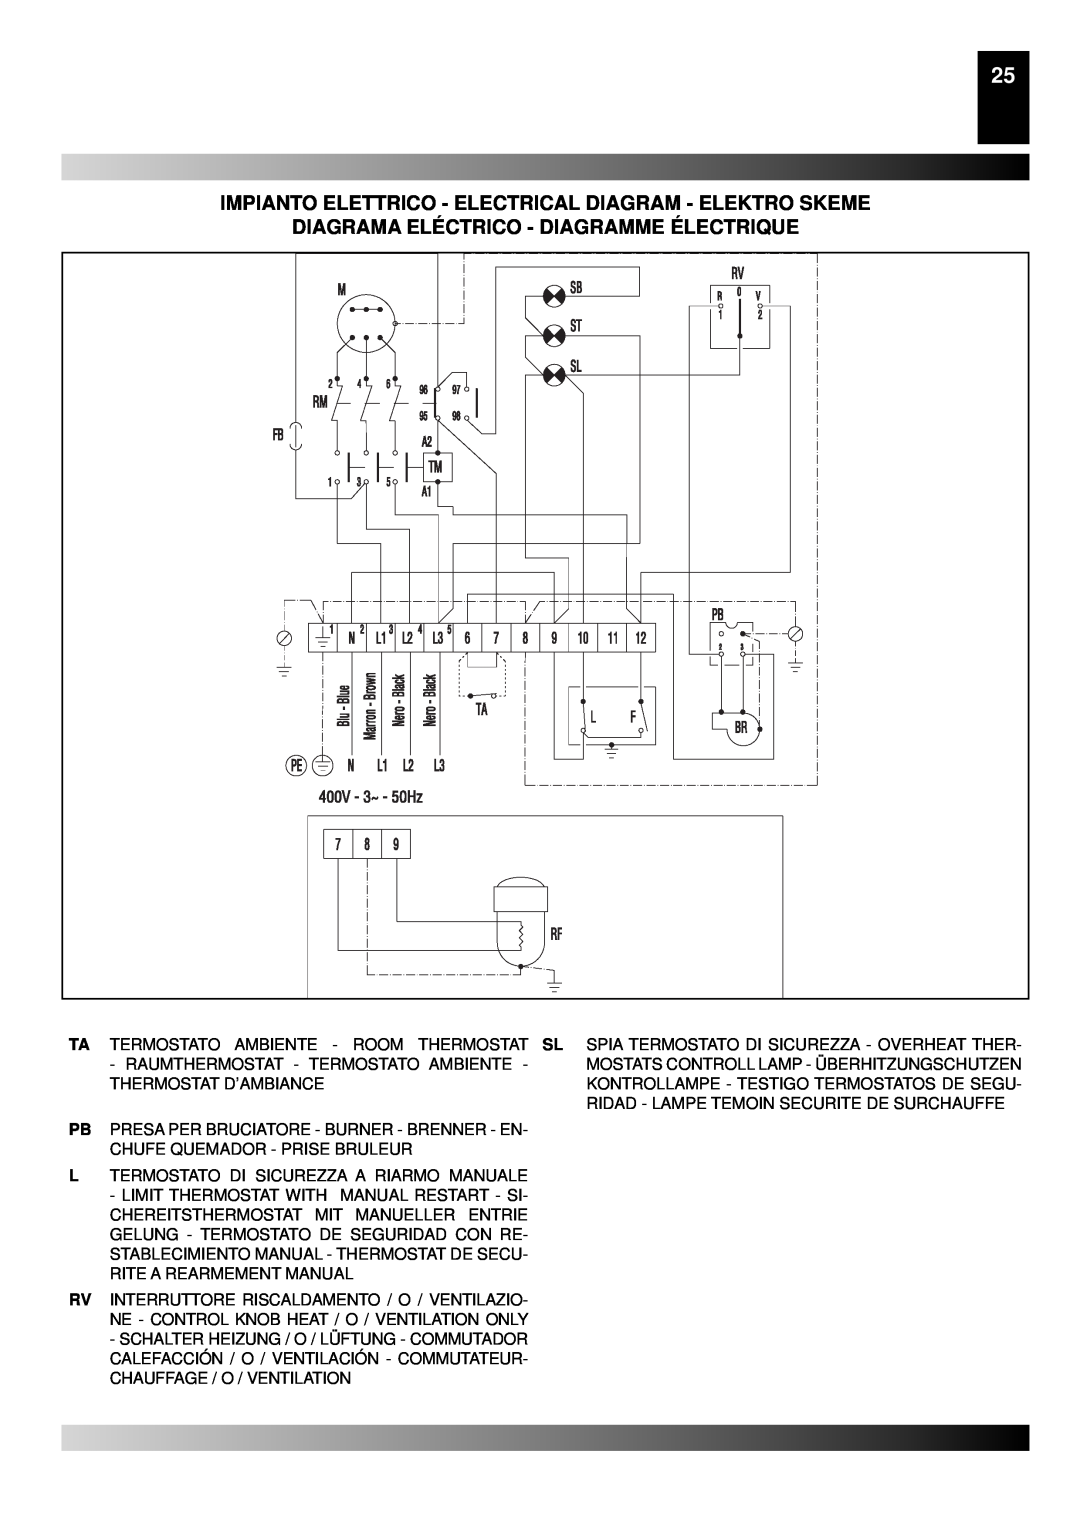 Master Lock BG 150 Impianto Elettrico - Electrical Diagram - Elektro Skeme, Diagrama Eléctrico - Diagramme Électrique 